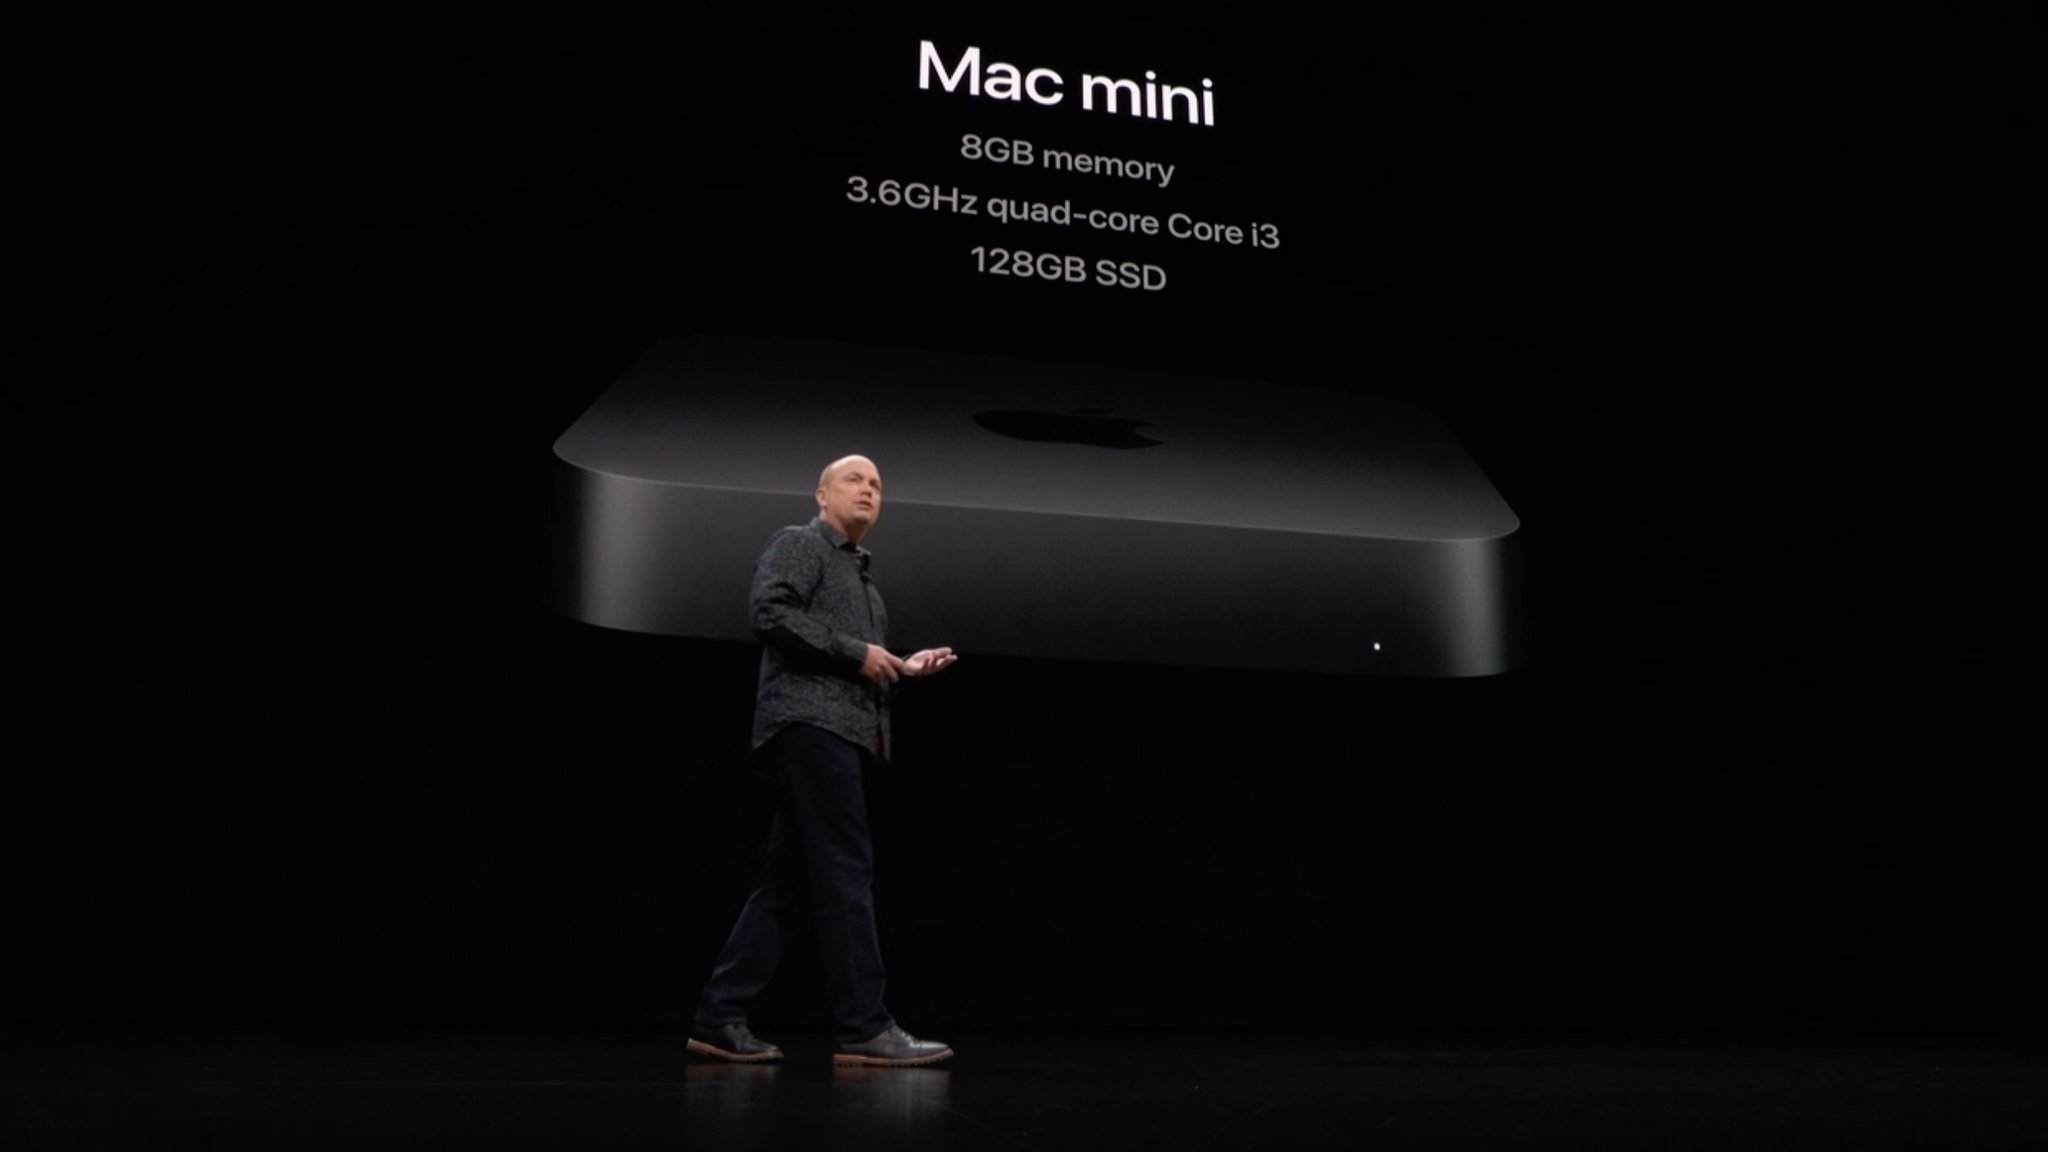 Especificaciones del nuevo Mac mini